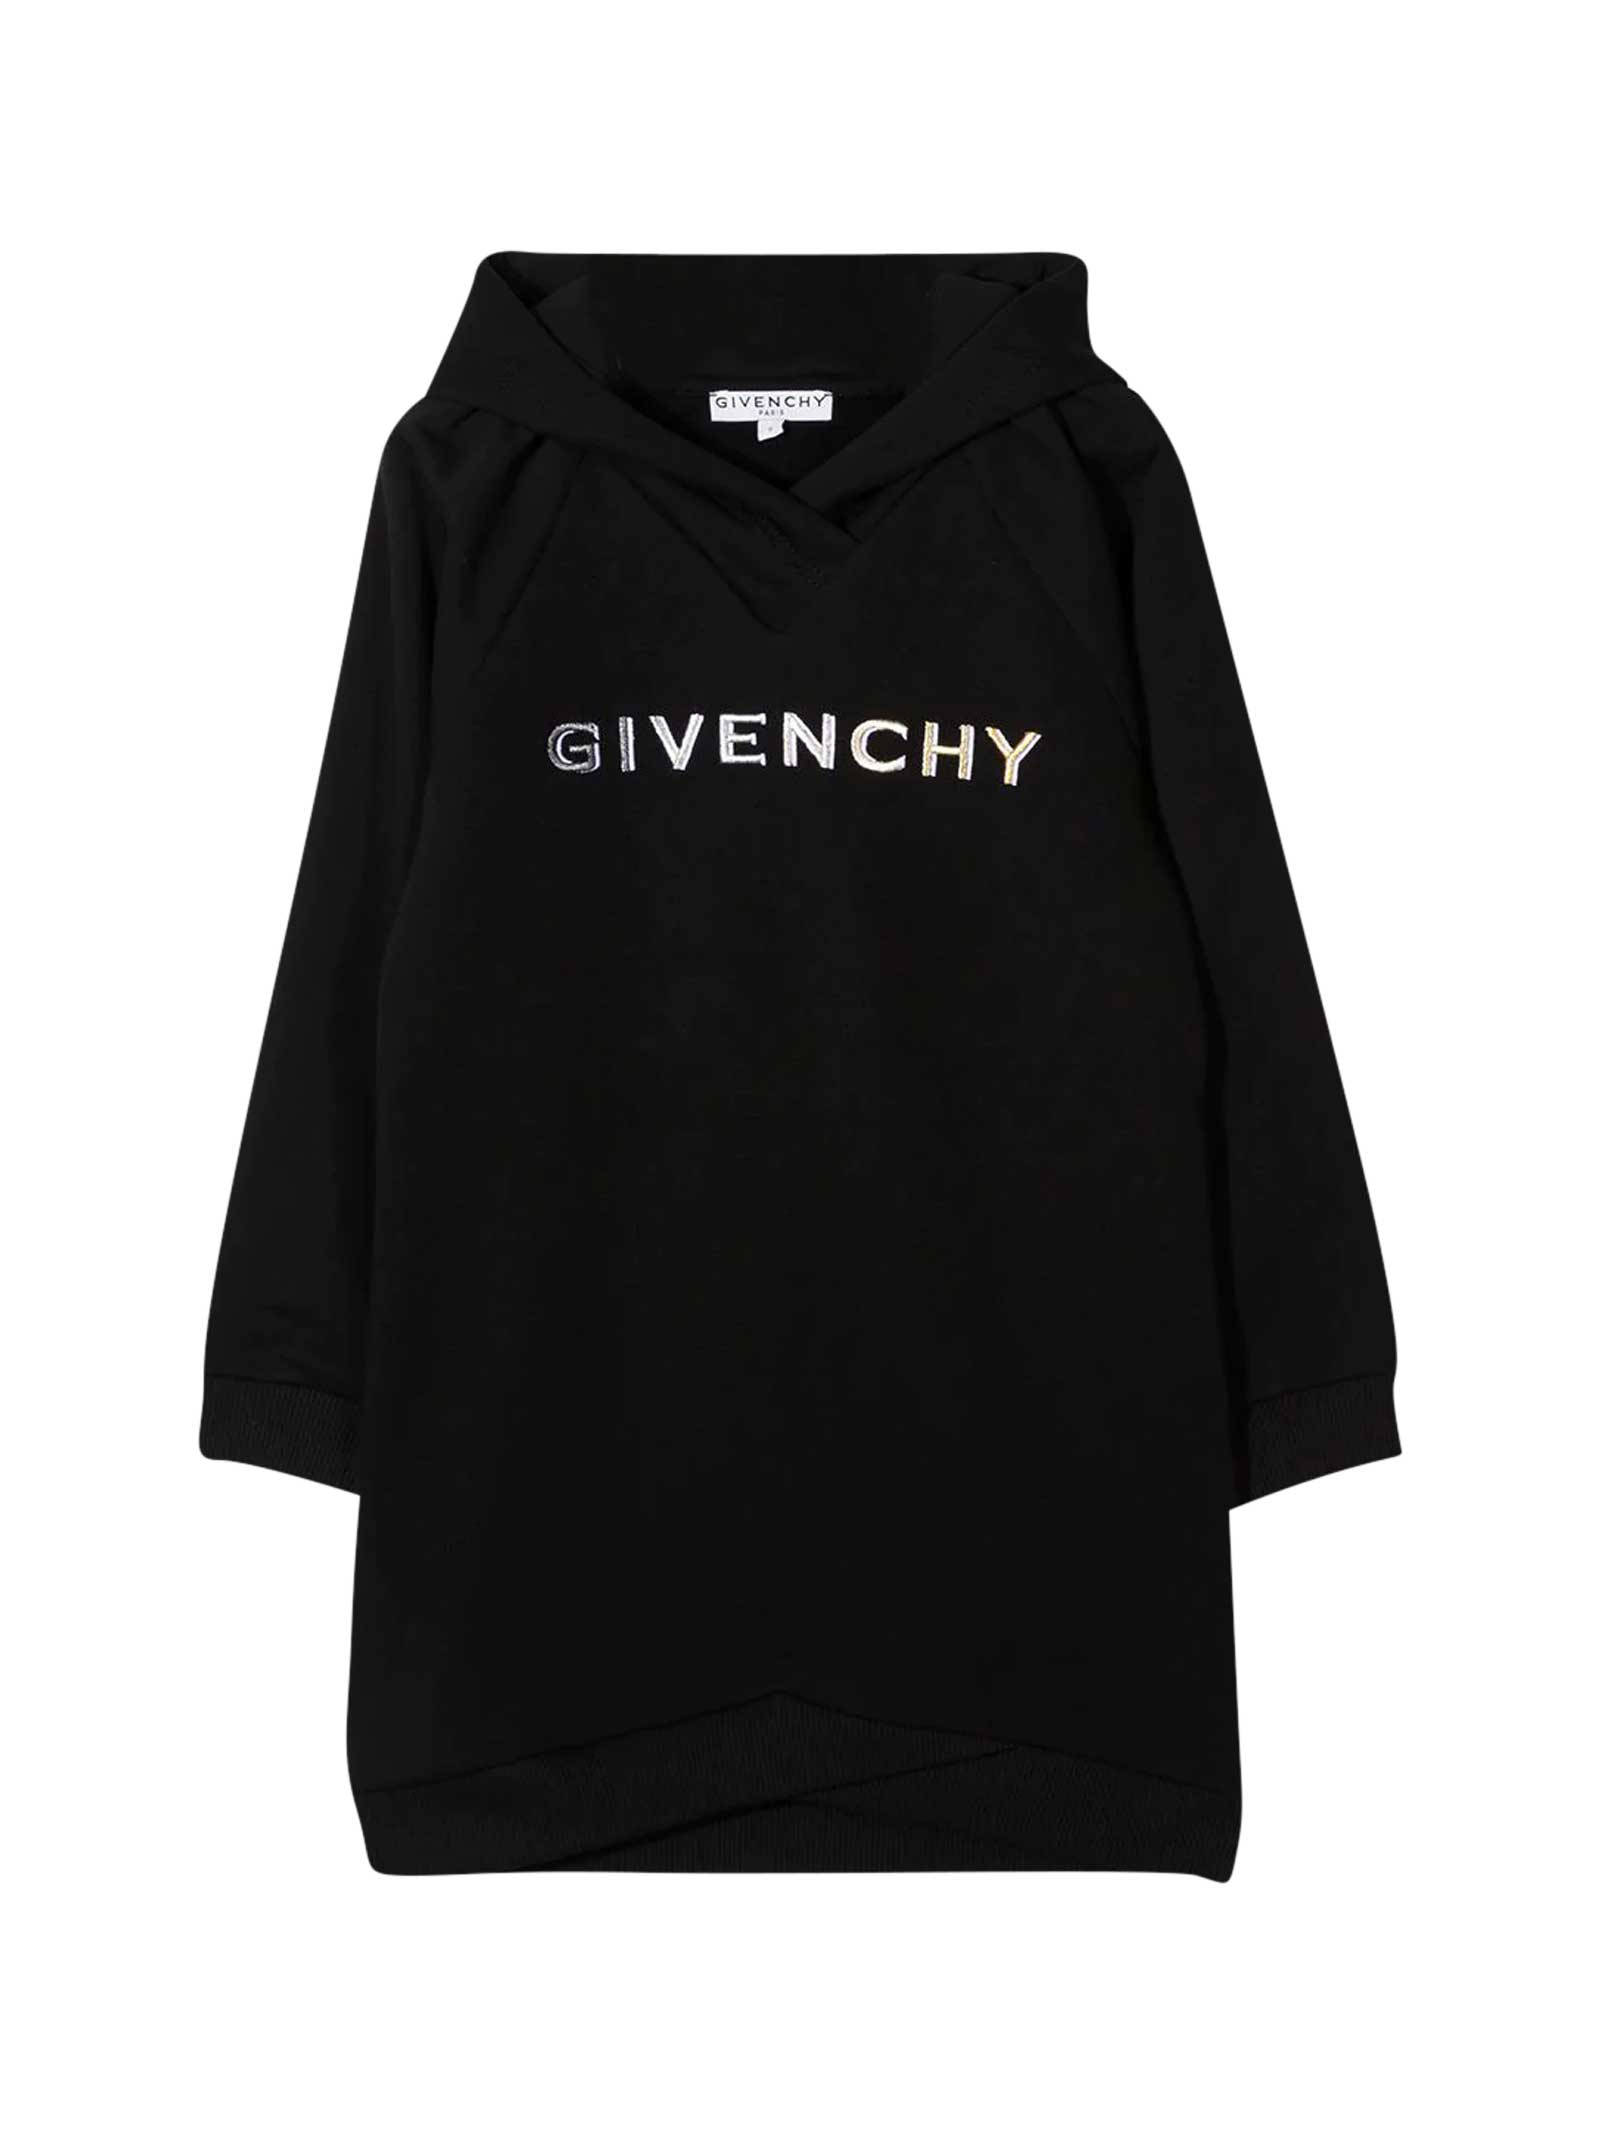 Givenchy Black Sweatshirt Dress